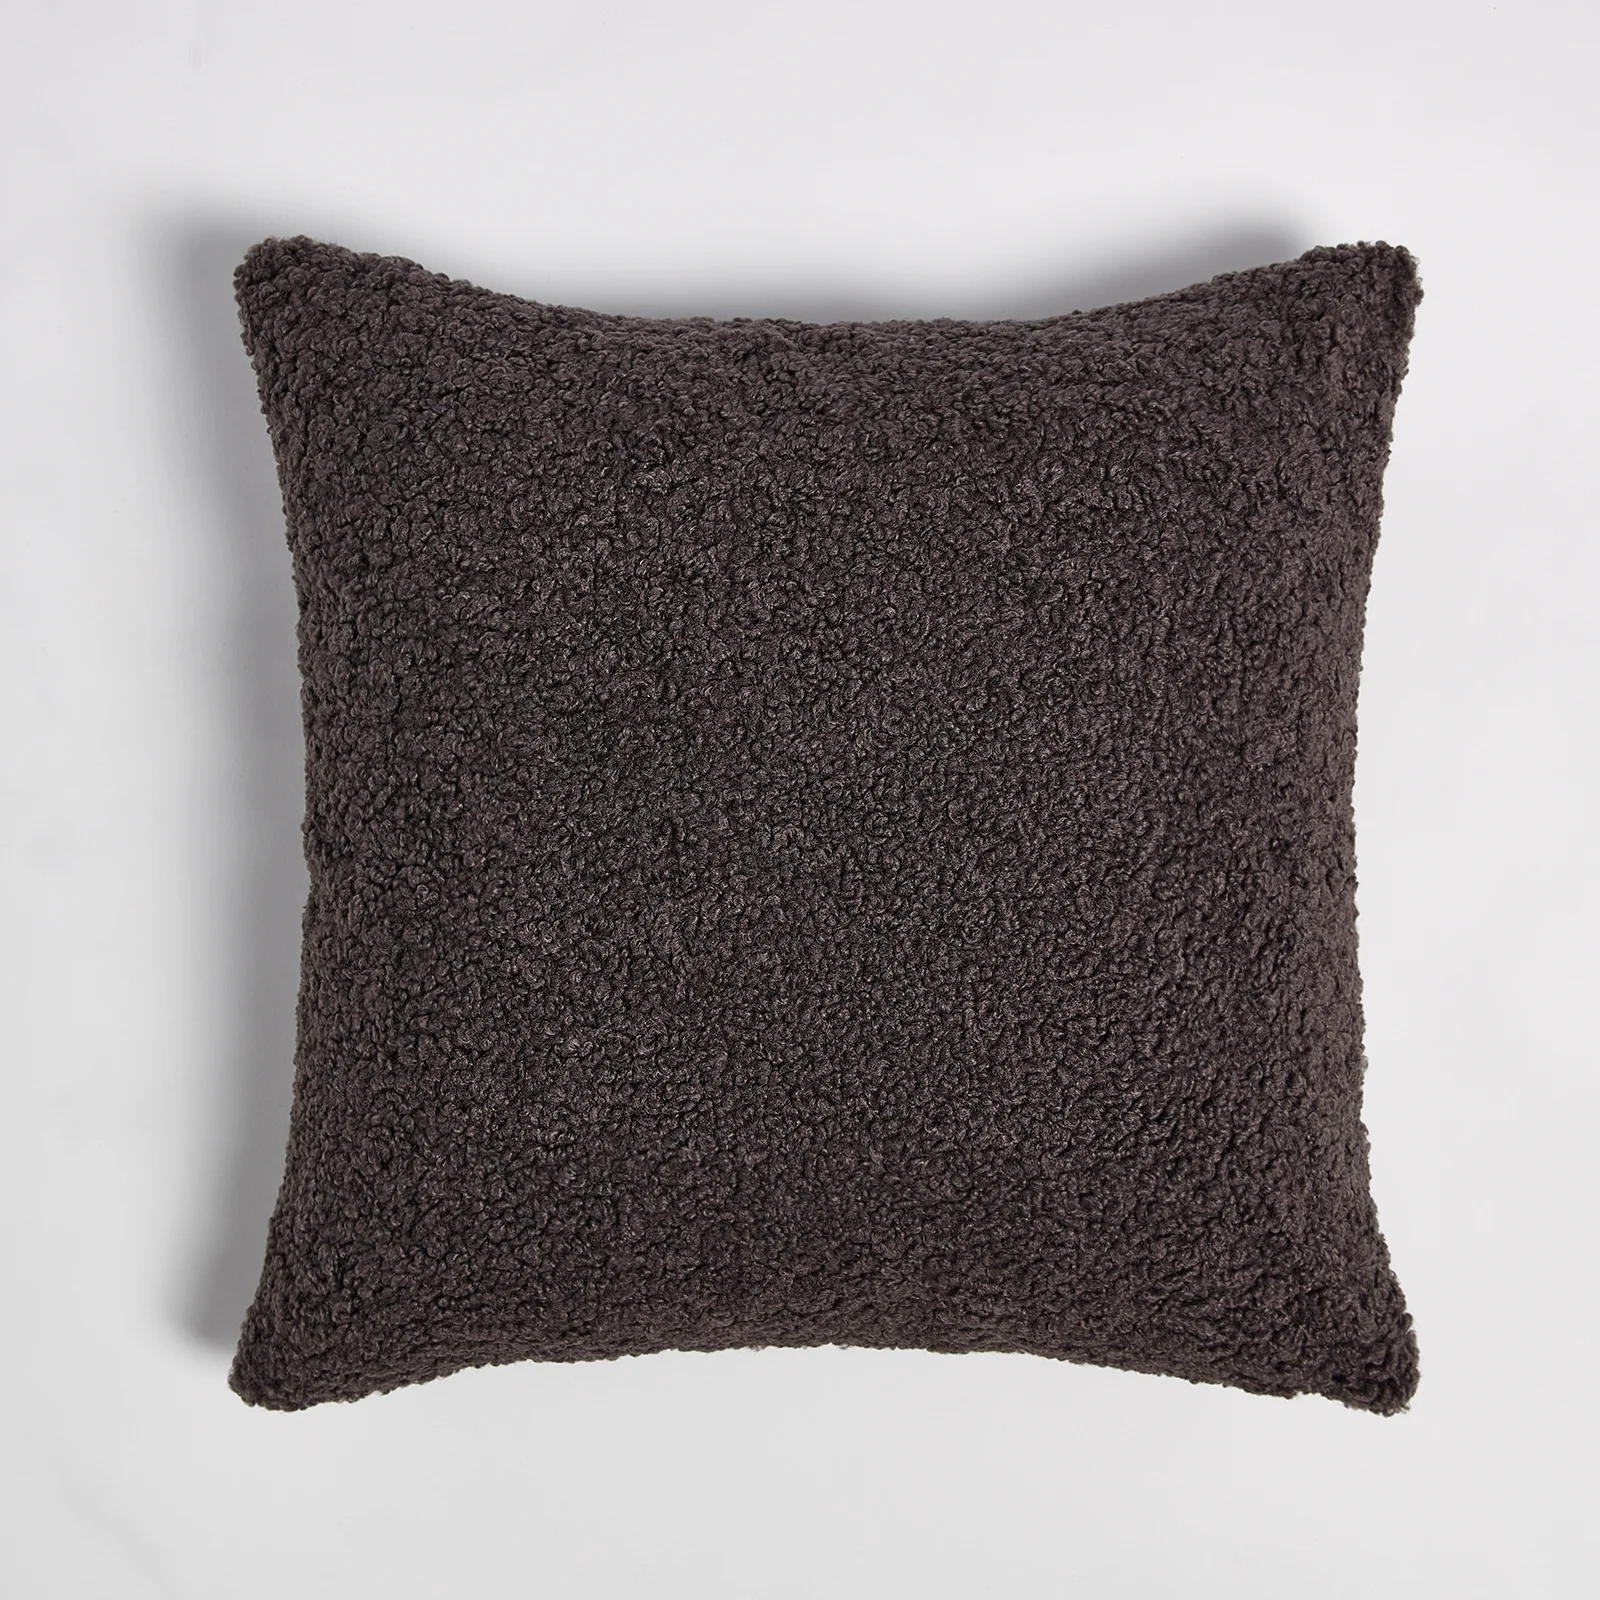 ïn home Faux Sheep Skin Cushion - Charcoal - 50x50cm Image 1